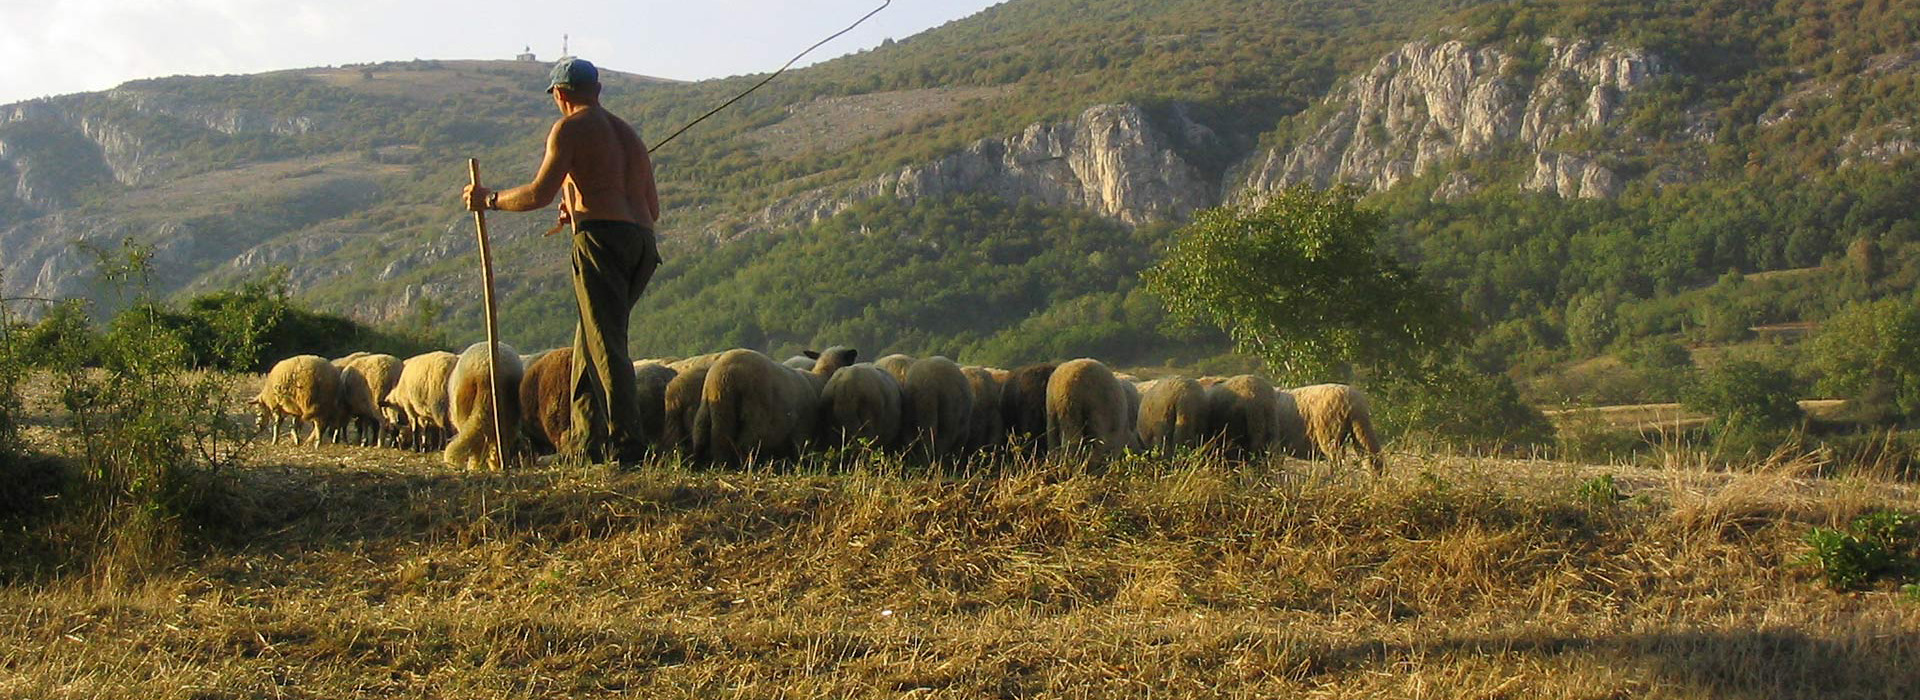 Walking Serbia guided holiday - Shepard in Sićevo village